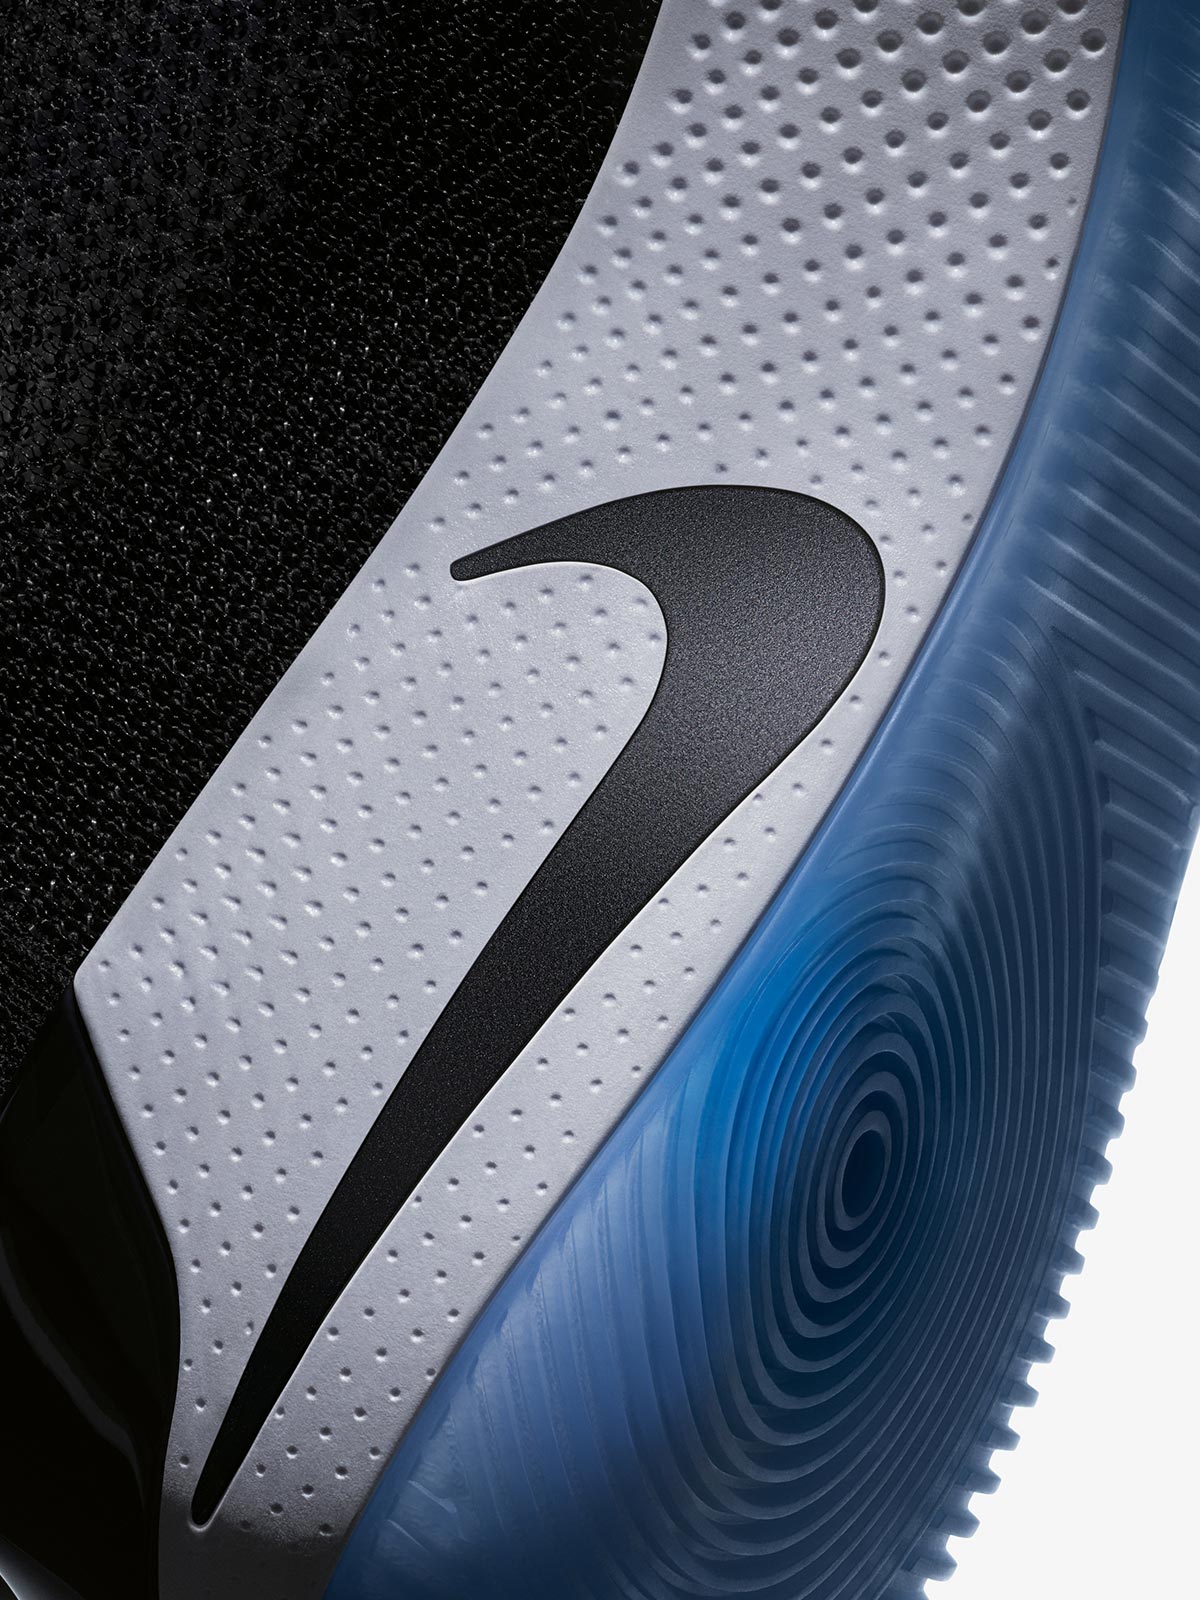 Revolutionary Self-Lacing Nike Adapt BB Basketball Shoes Revealed ...